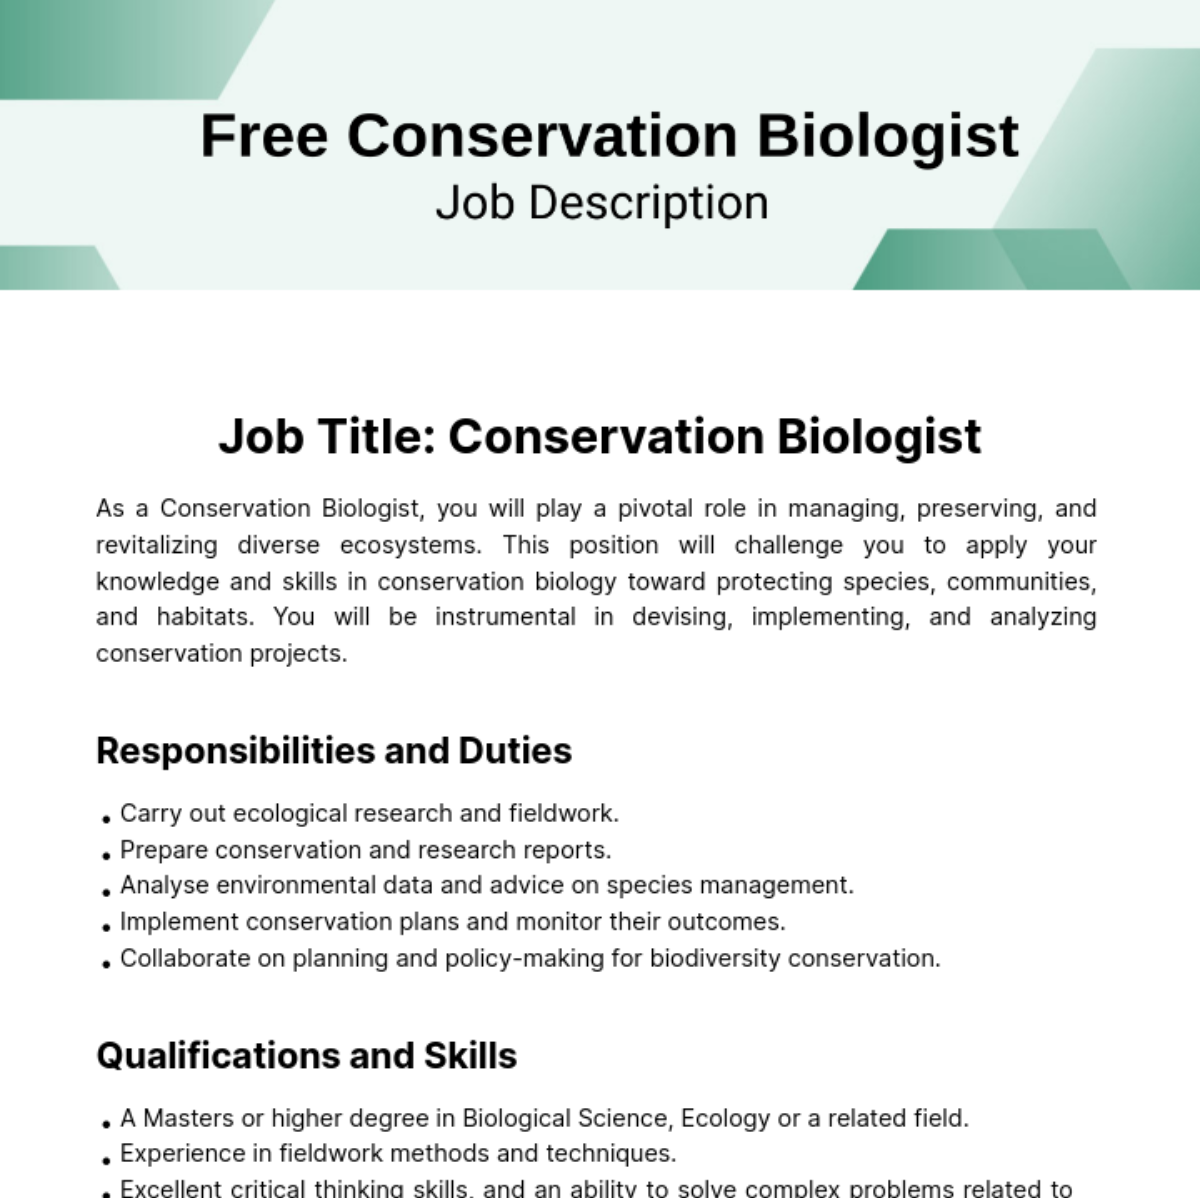 Free Conservation Biologist Job Description Template